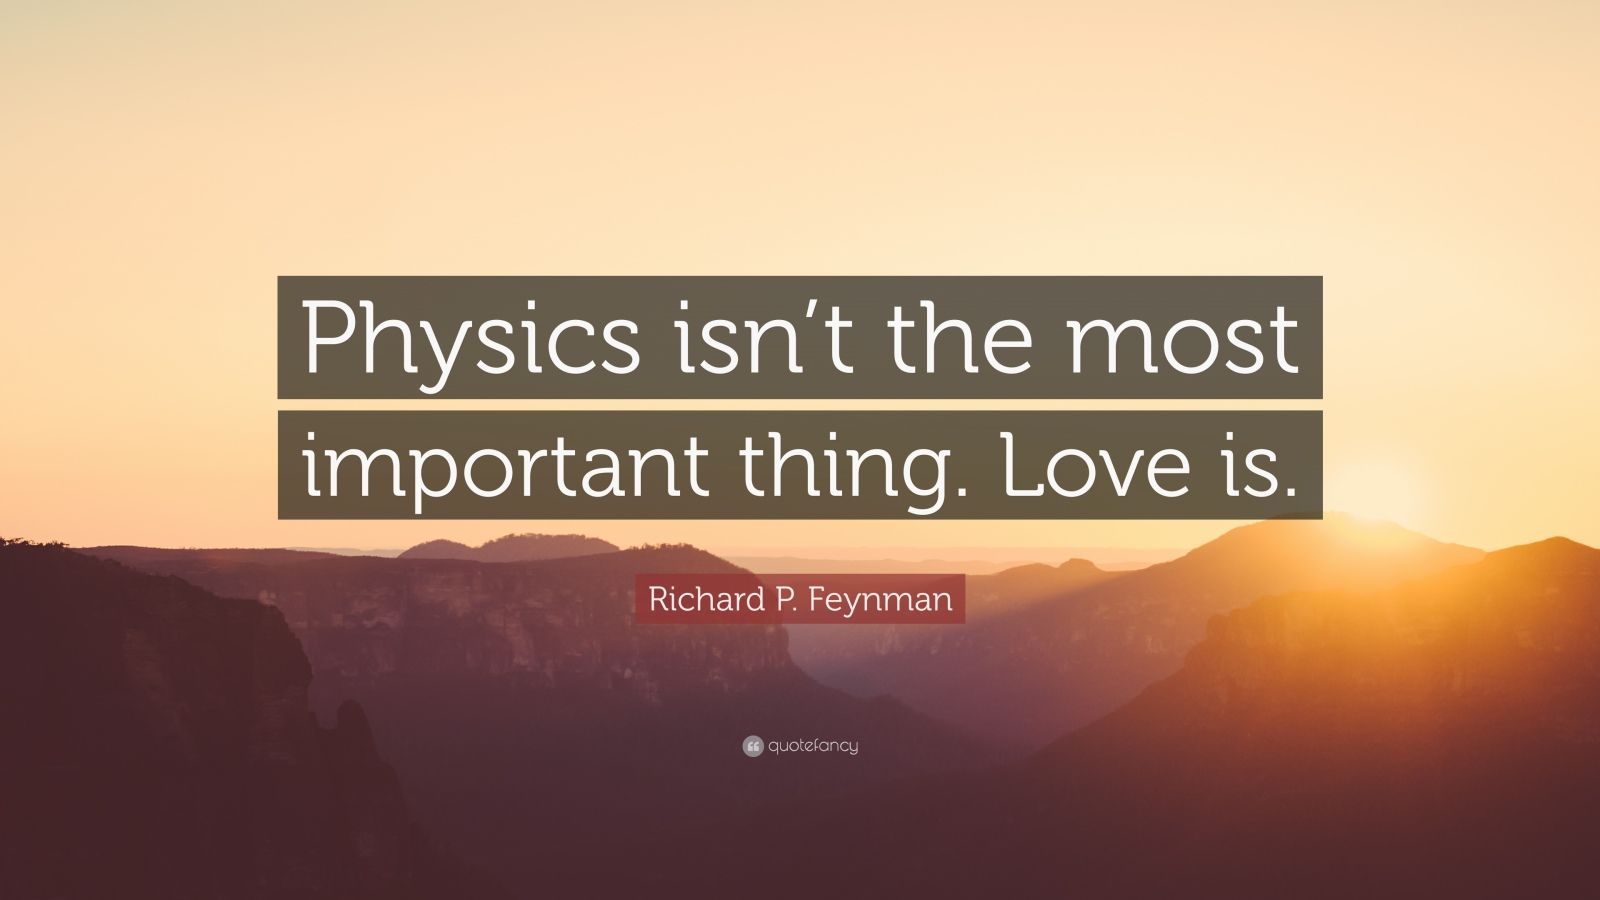 Top 280 Richard P. Feynman Quotes | 2021 Edition | Free ...